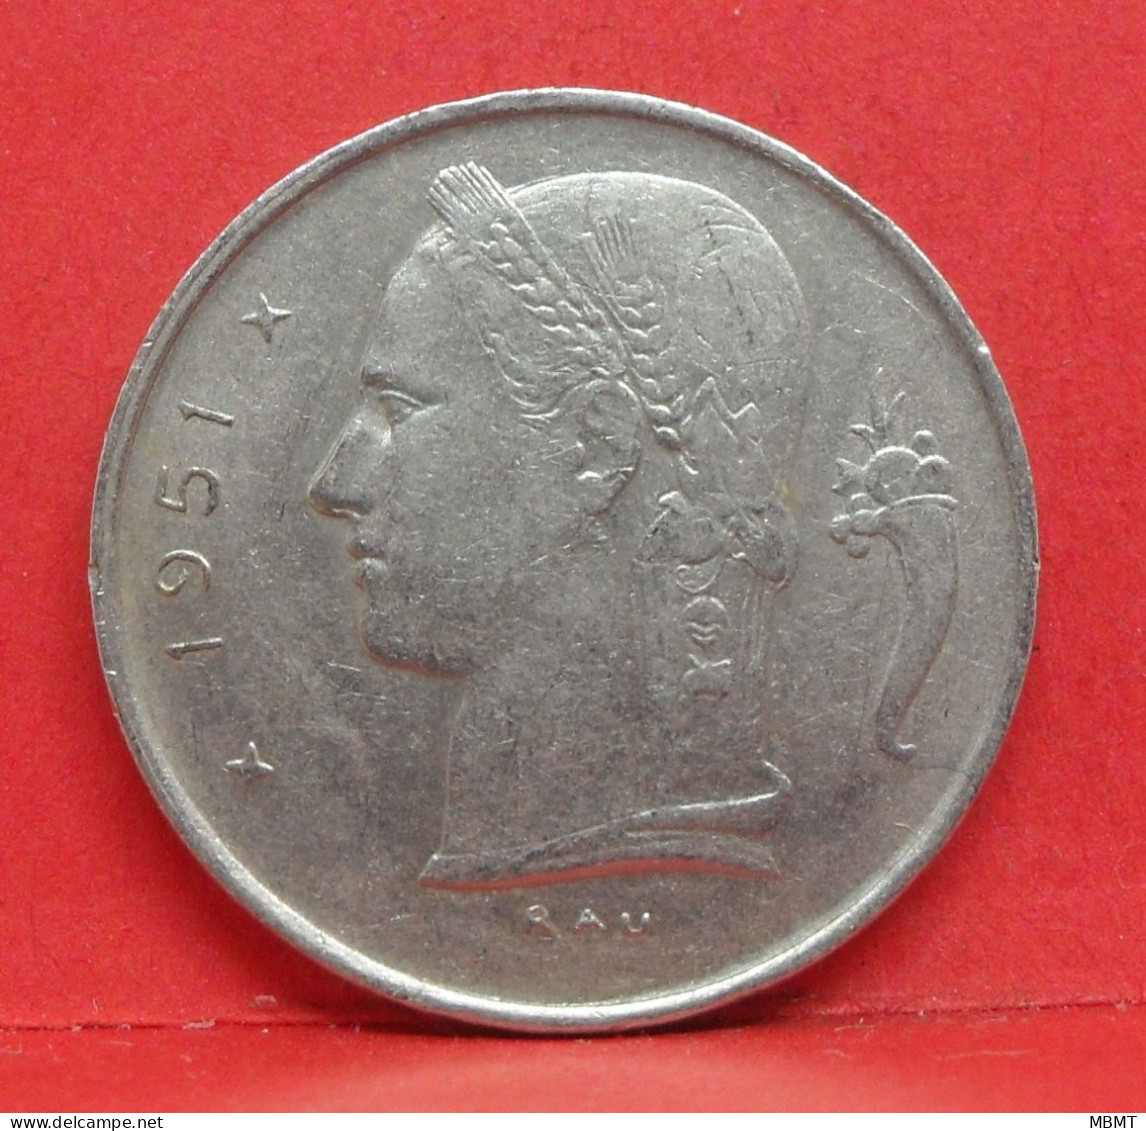 1 Frank 1951 - SUP - Pièce Monnaie Belgie - Article N°1917 - 1 Franc